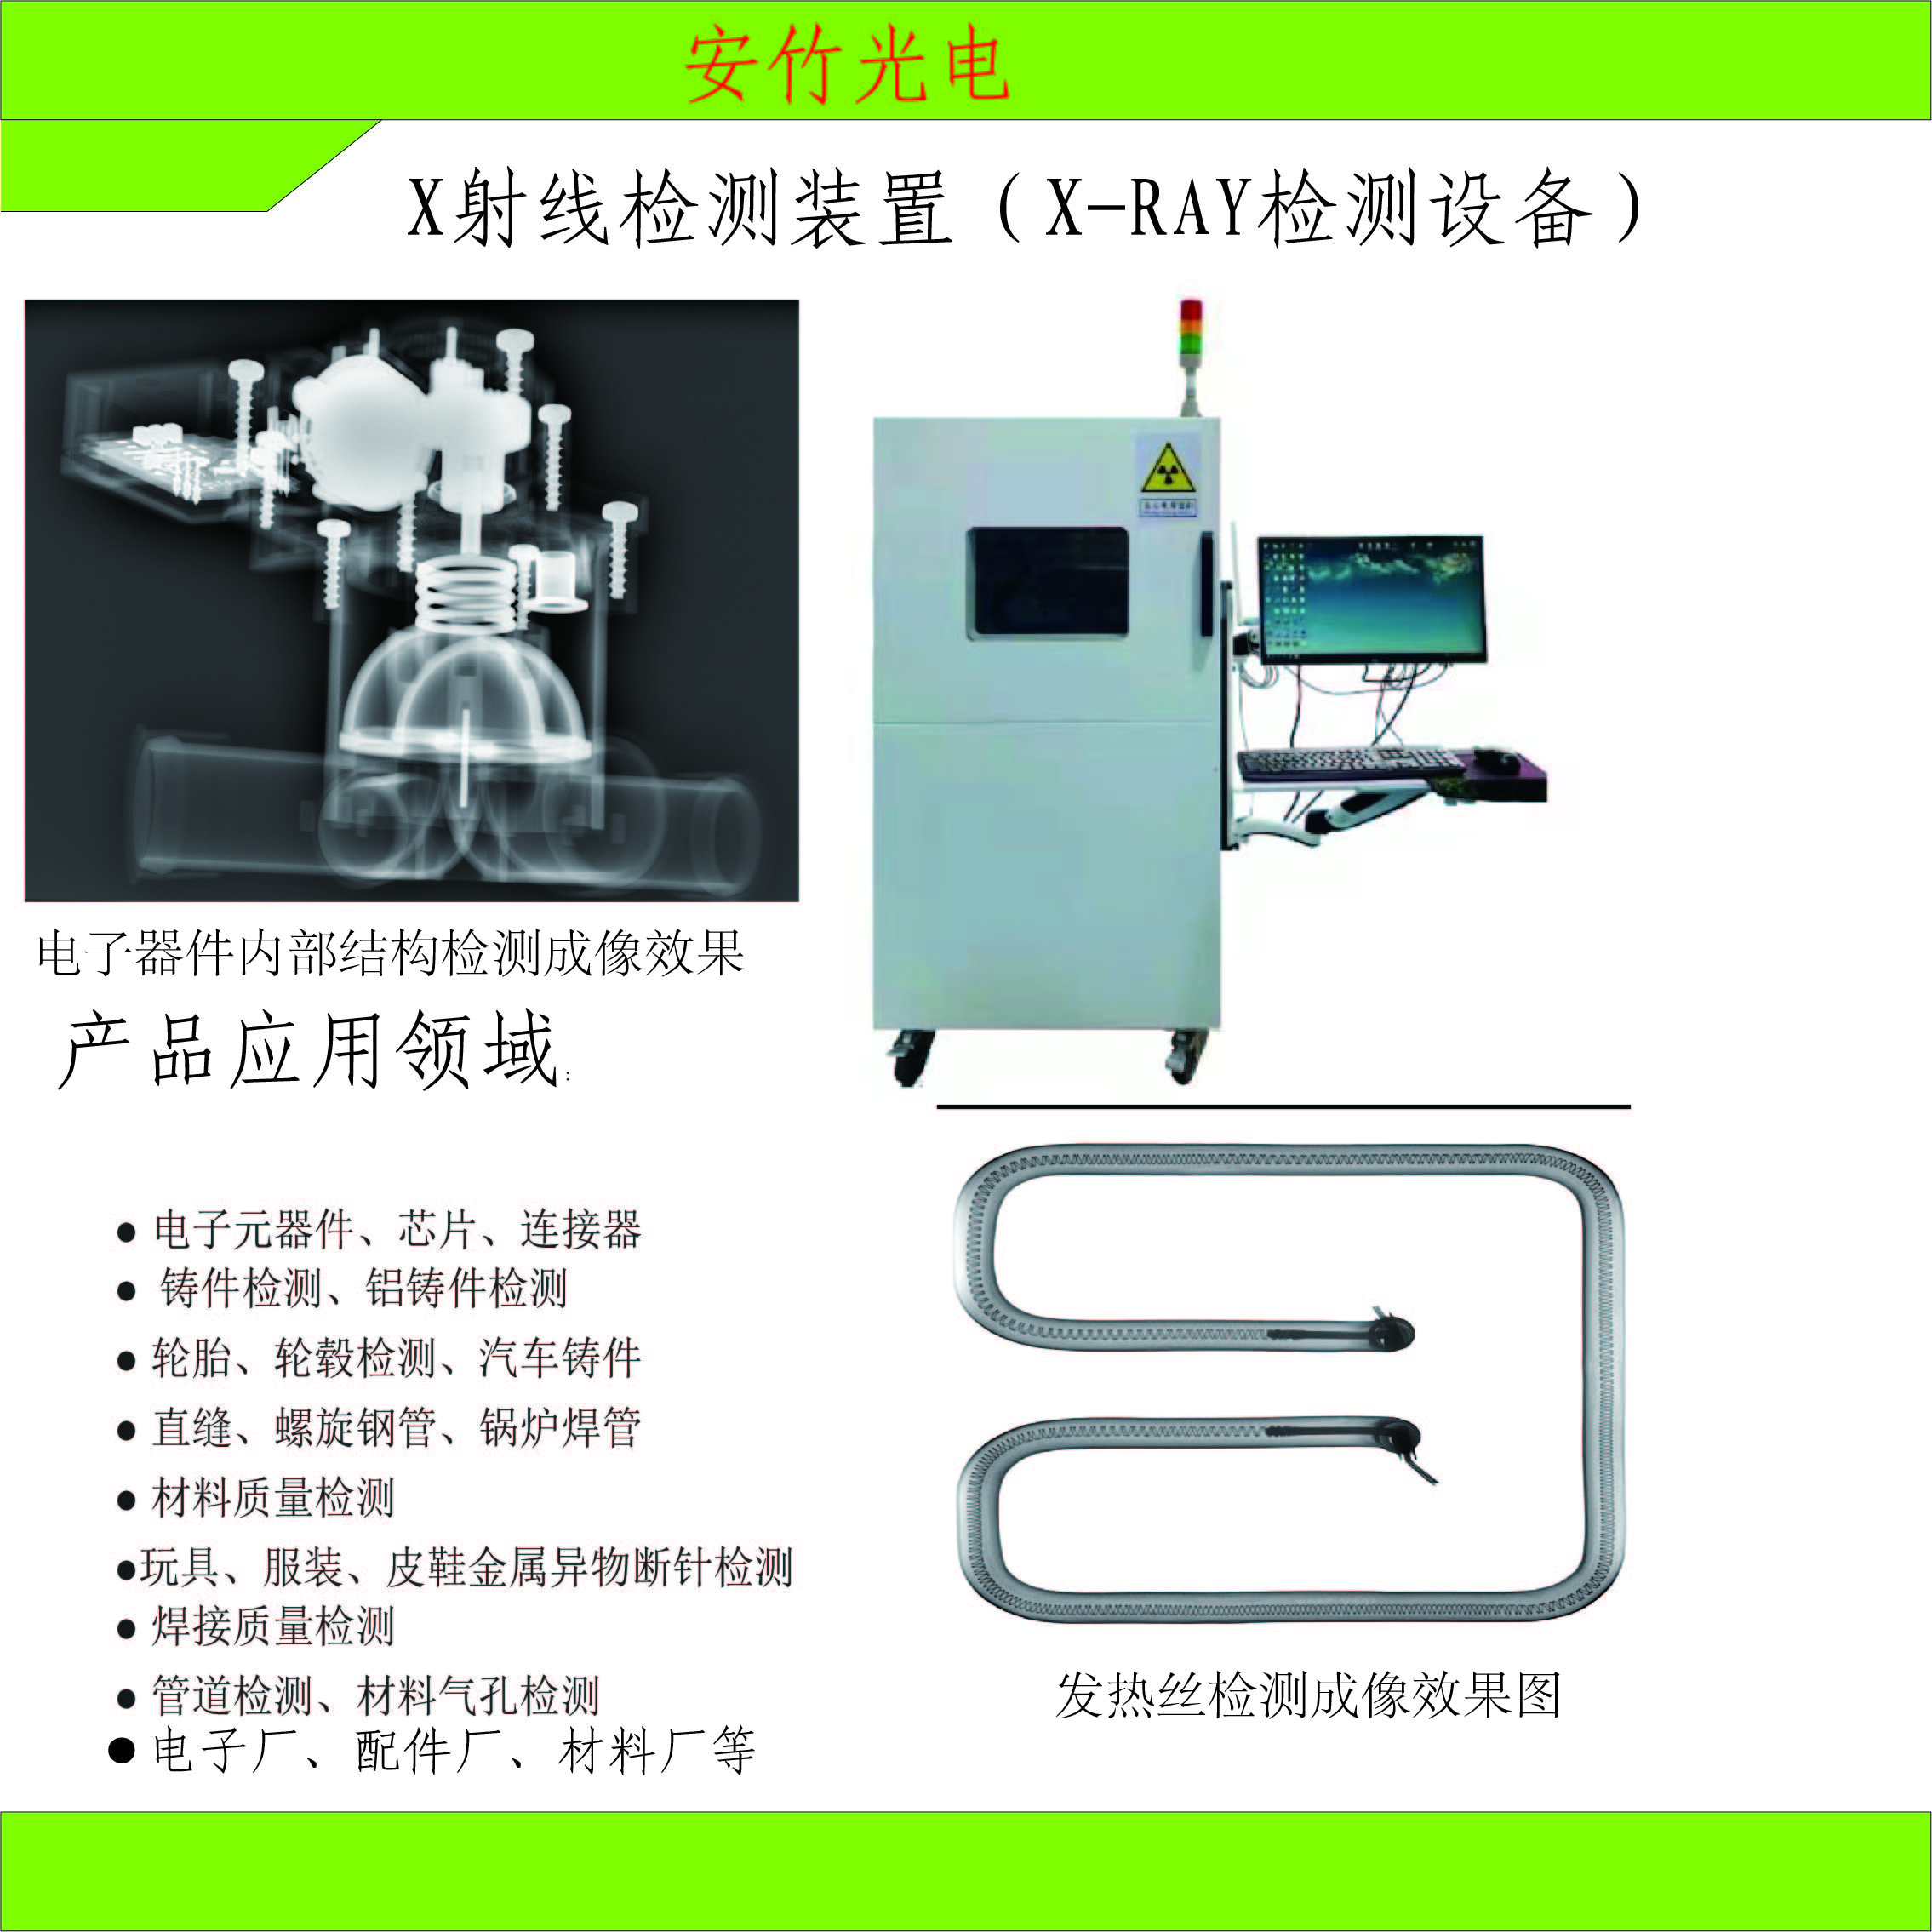 Industrial XDR-AZ350 nondestructive testing equipment X-ray generator detector X-ray machine detector